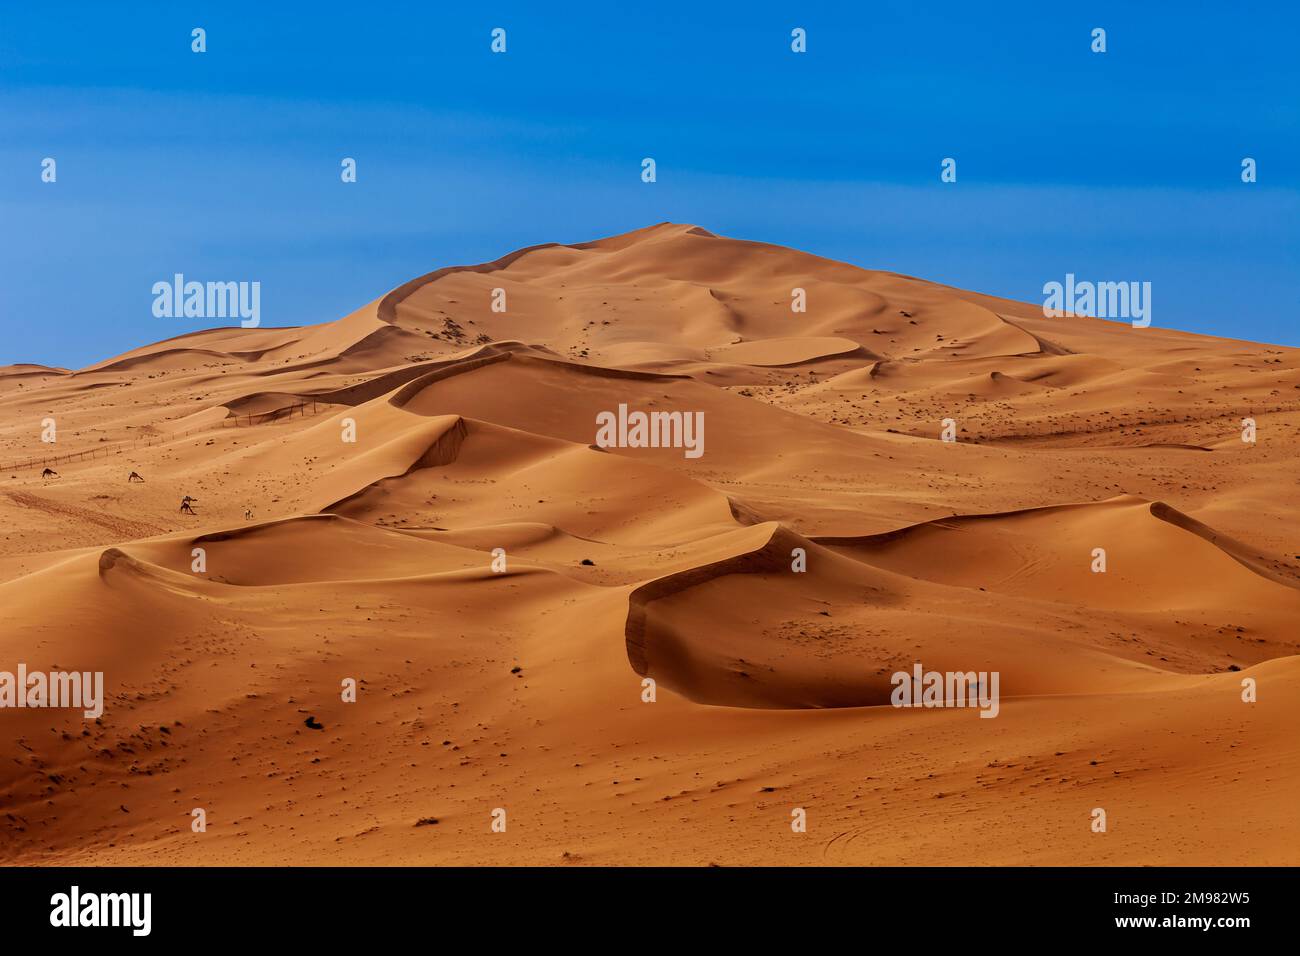 Desert landscape with sand dunes, Saudi Arabia Stock Photo